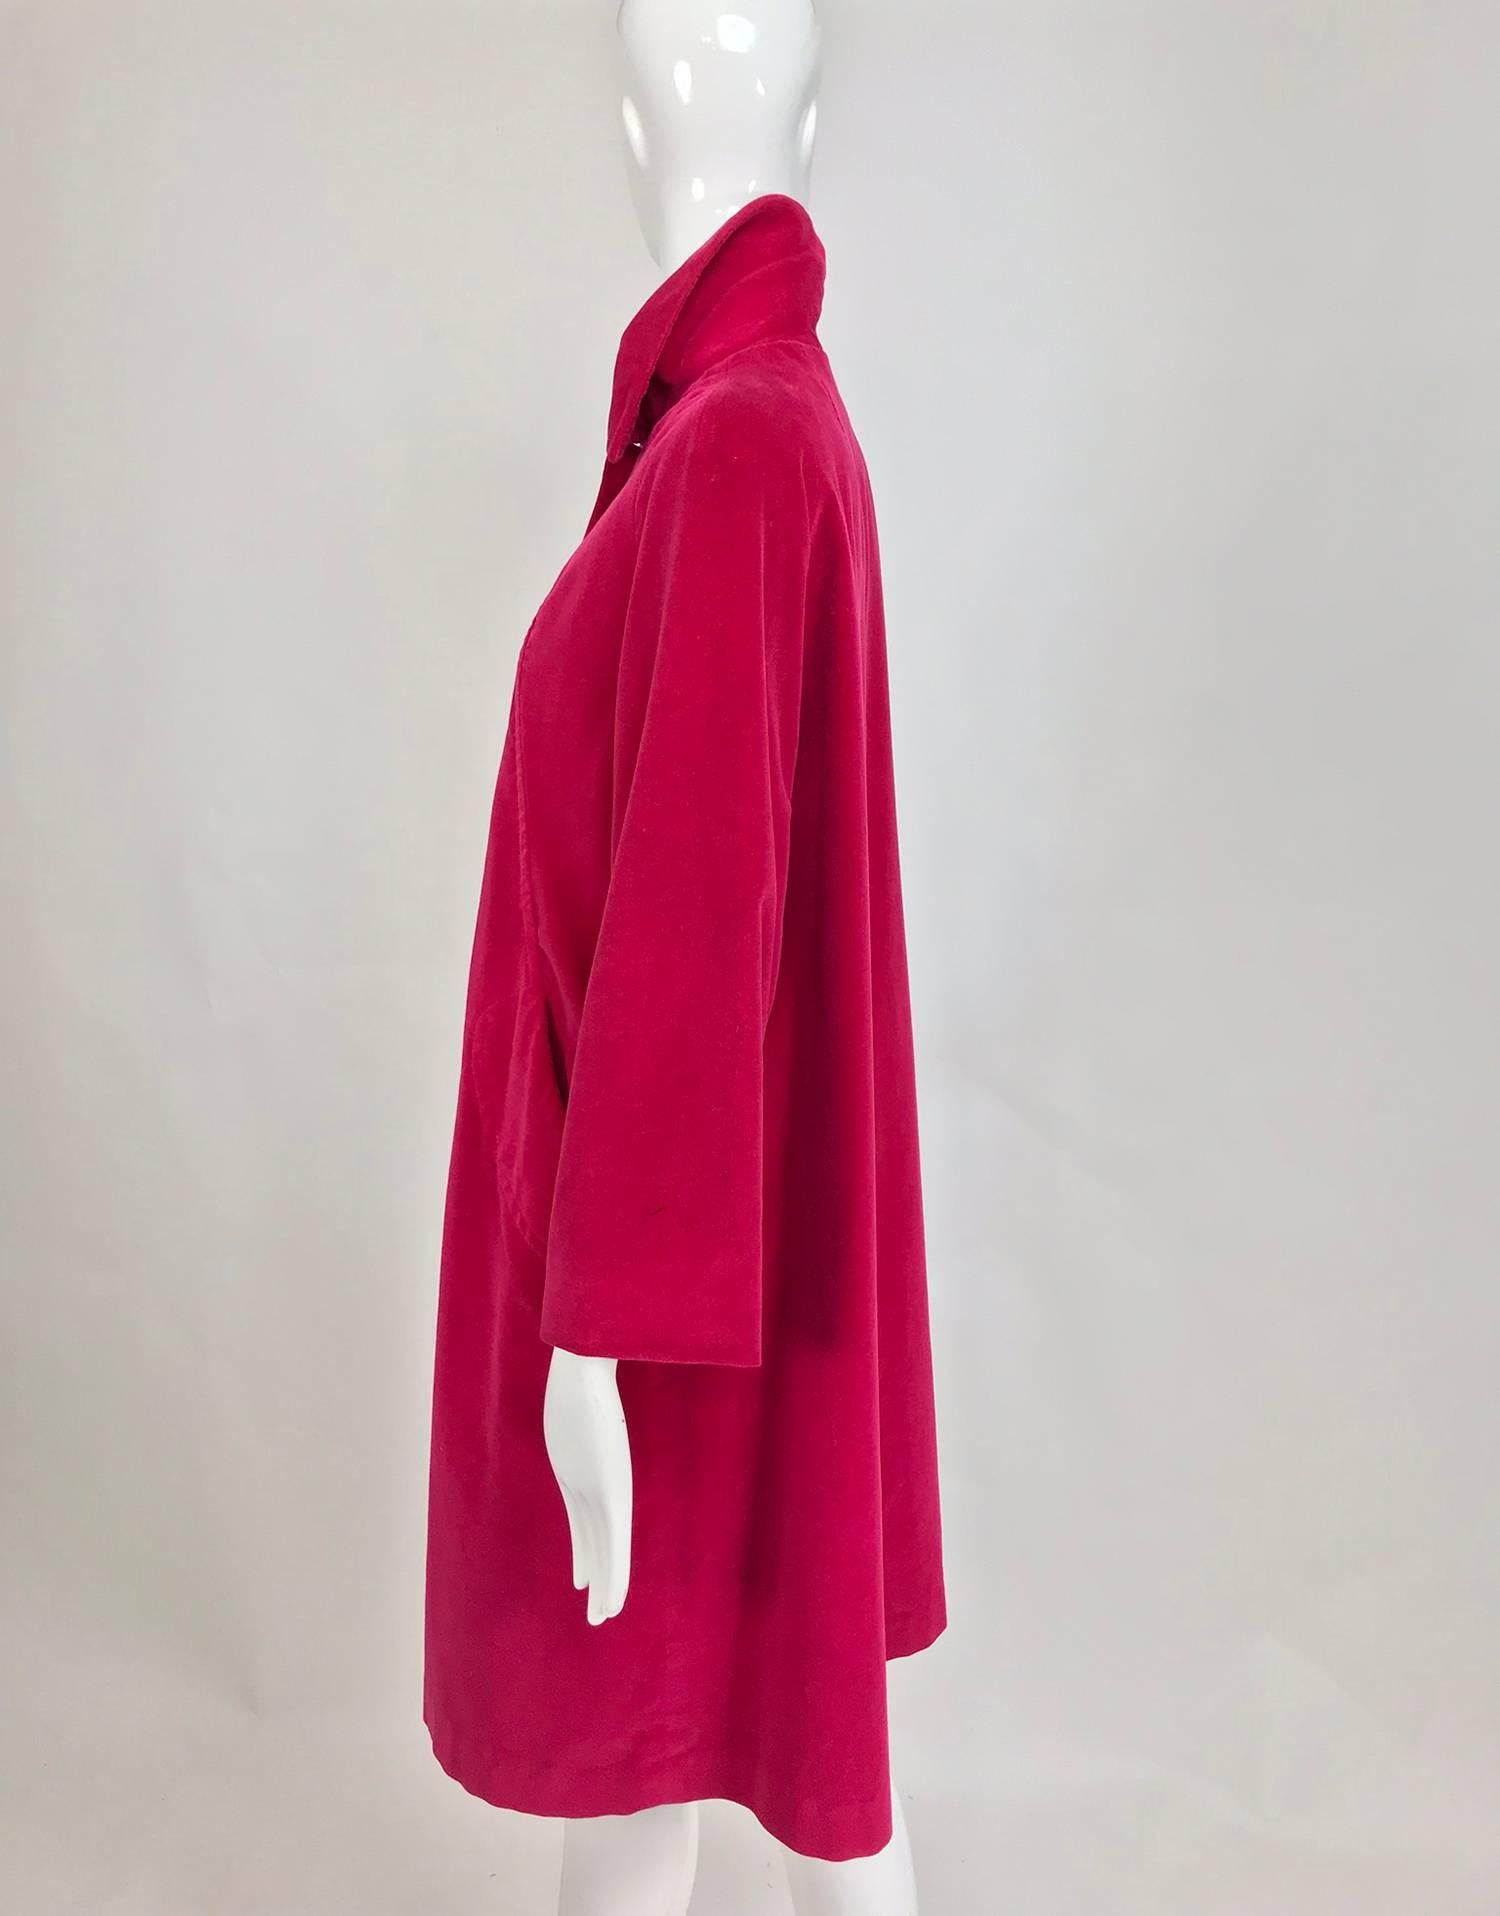 Women's Marguerite Rubel San Francisco bright pink velvet coat 1960s